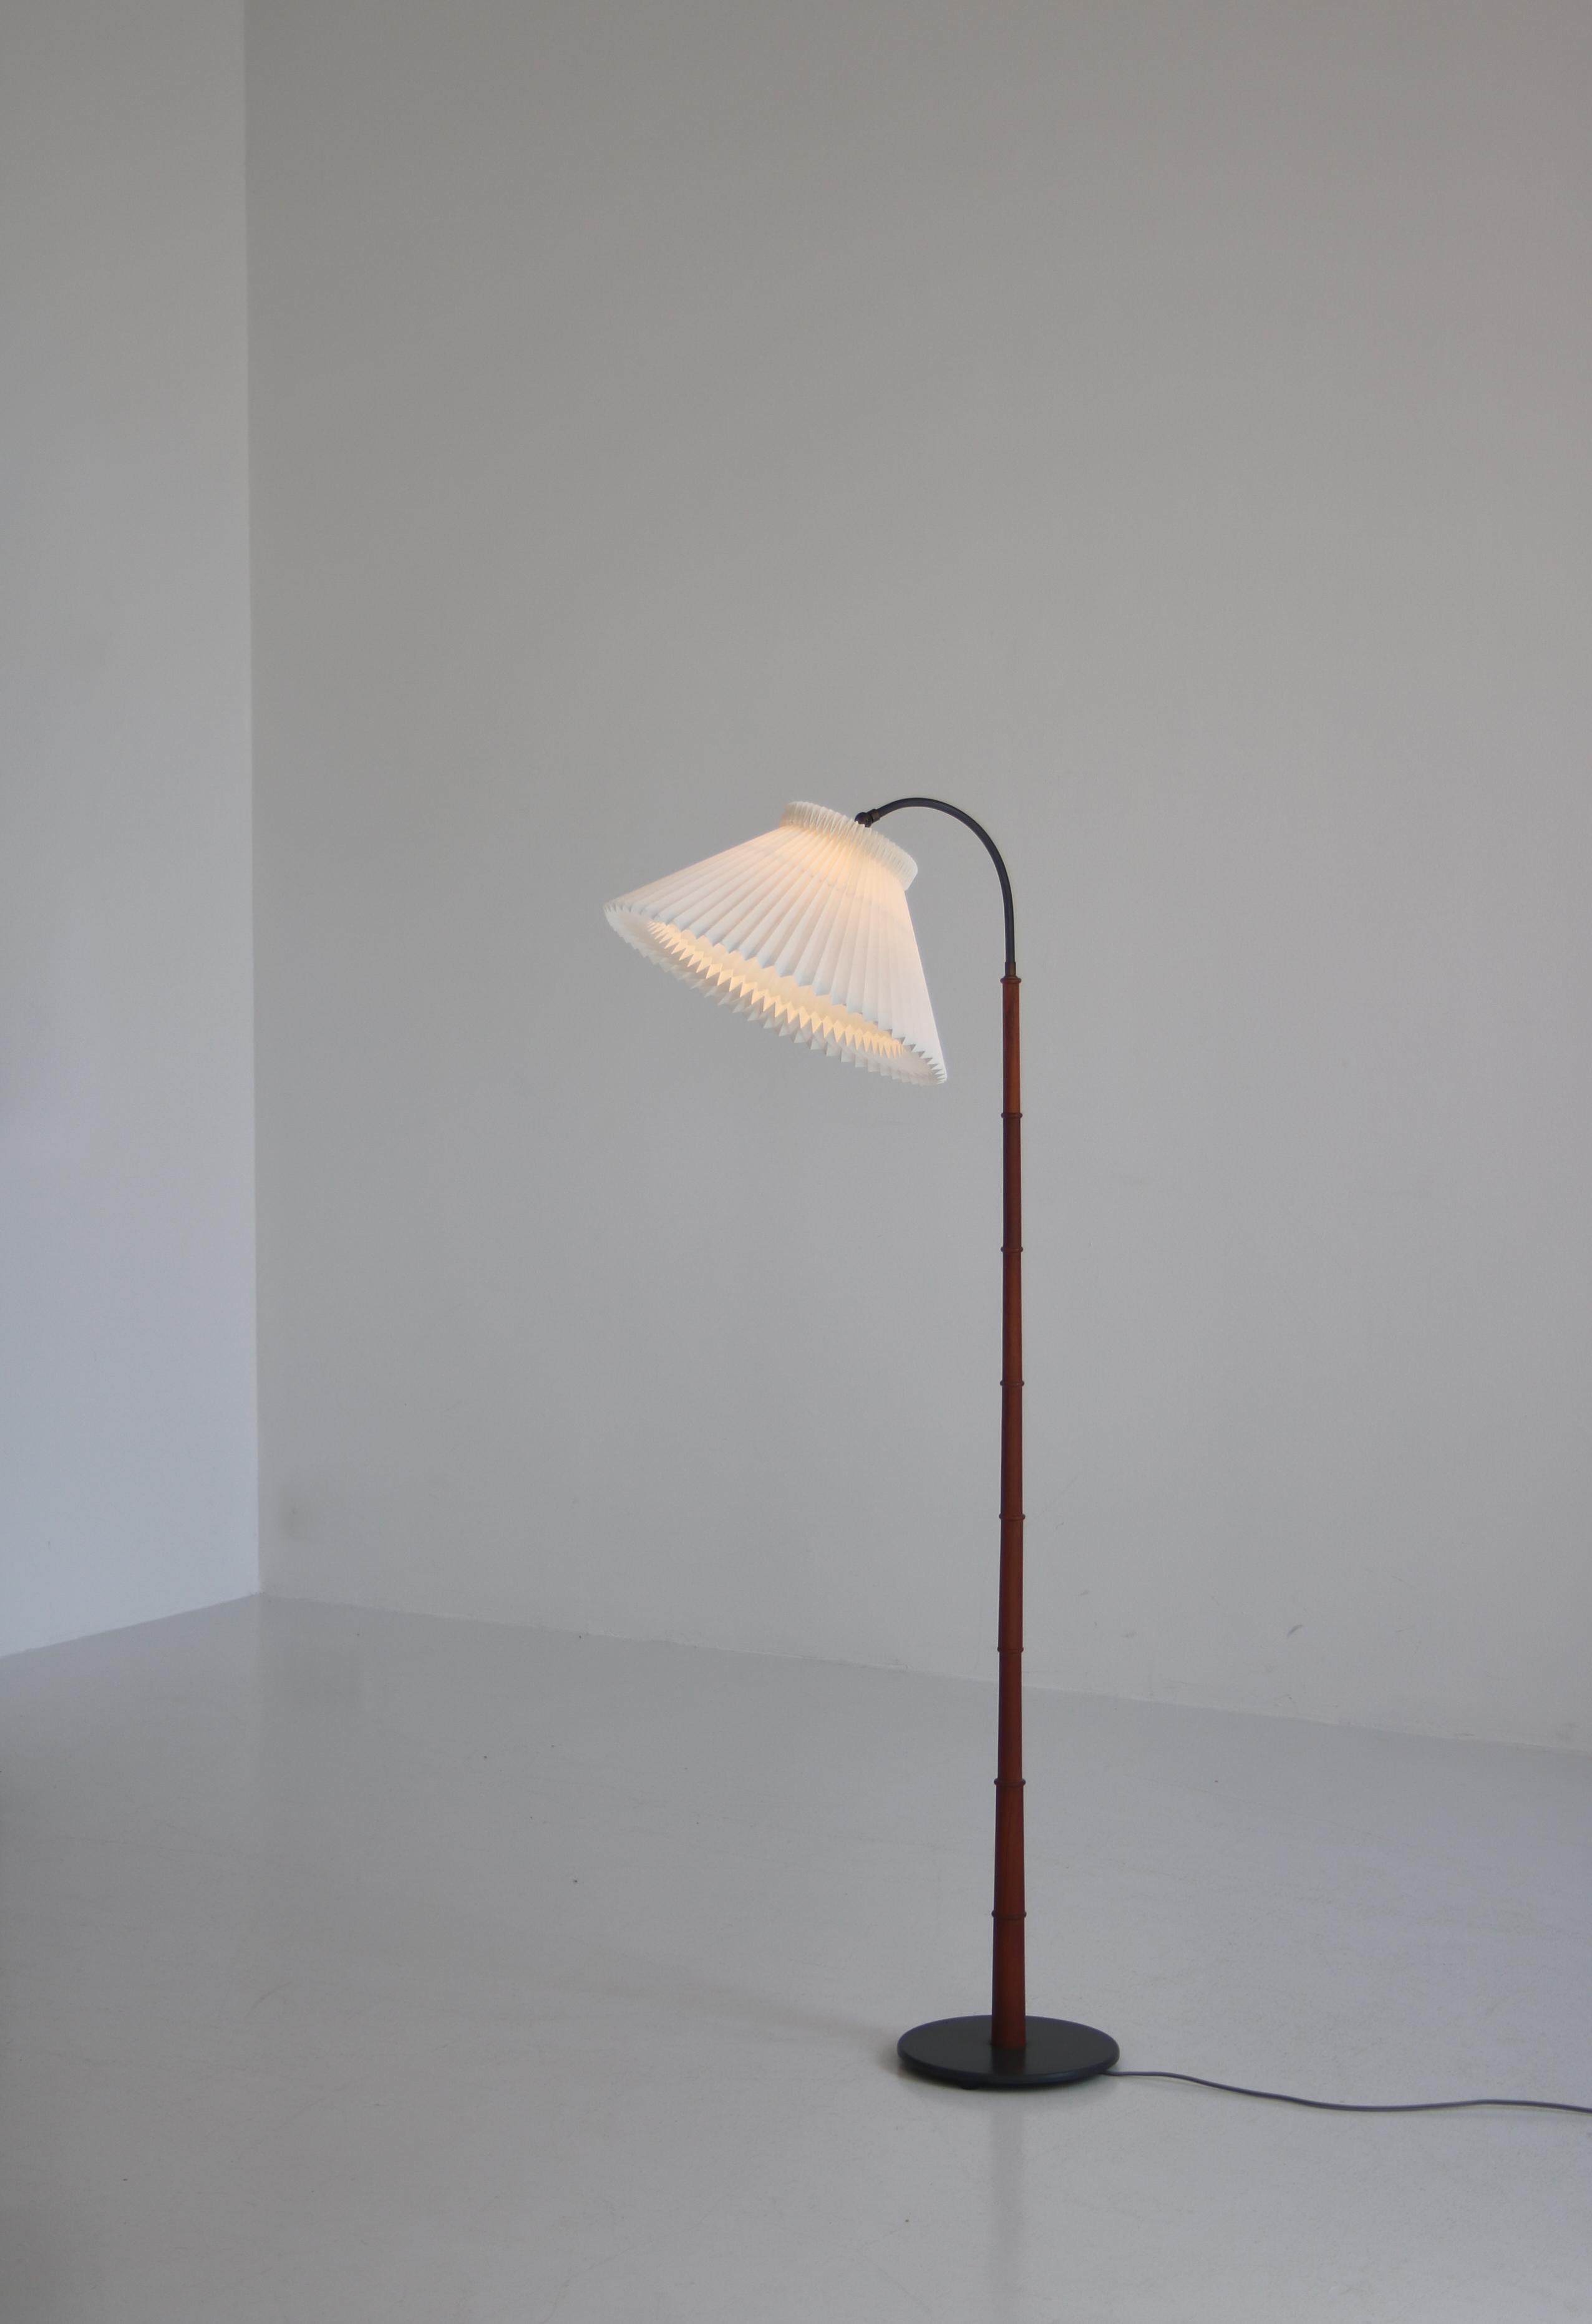 Mid-20th Century Danish Modern Floor Lamp in Teak with Hand Folded Le Klint Shade, 1950s For Sale